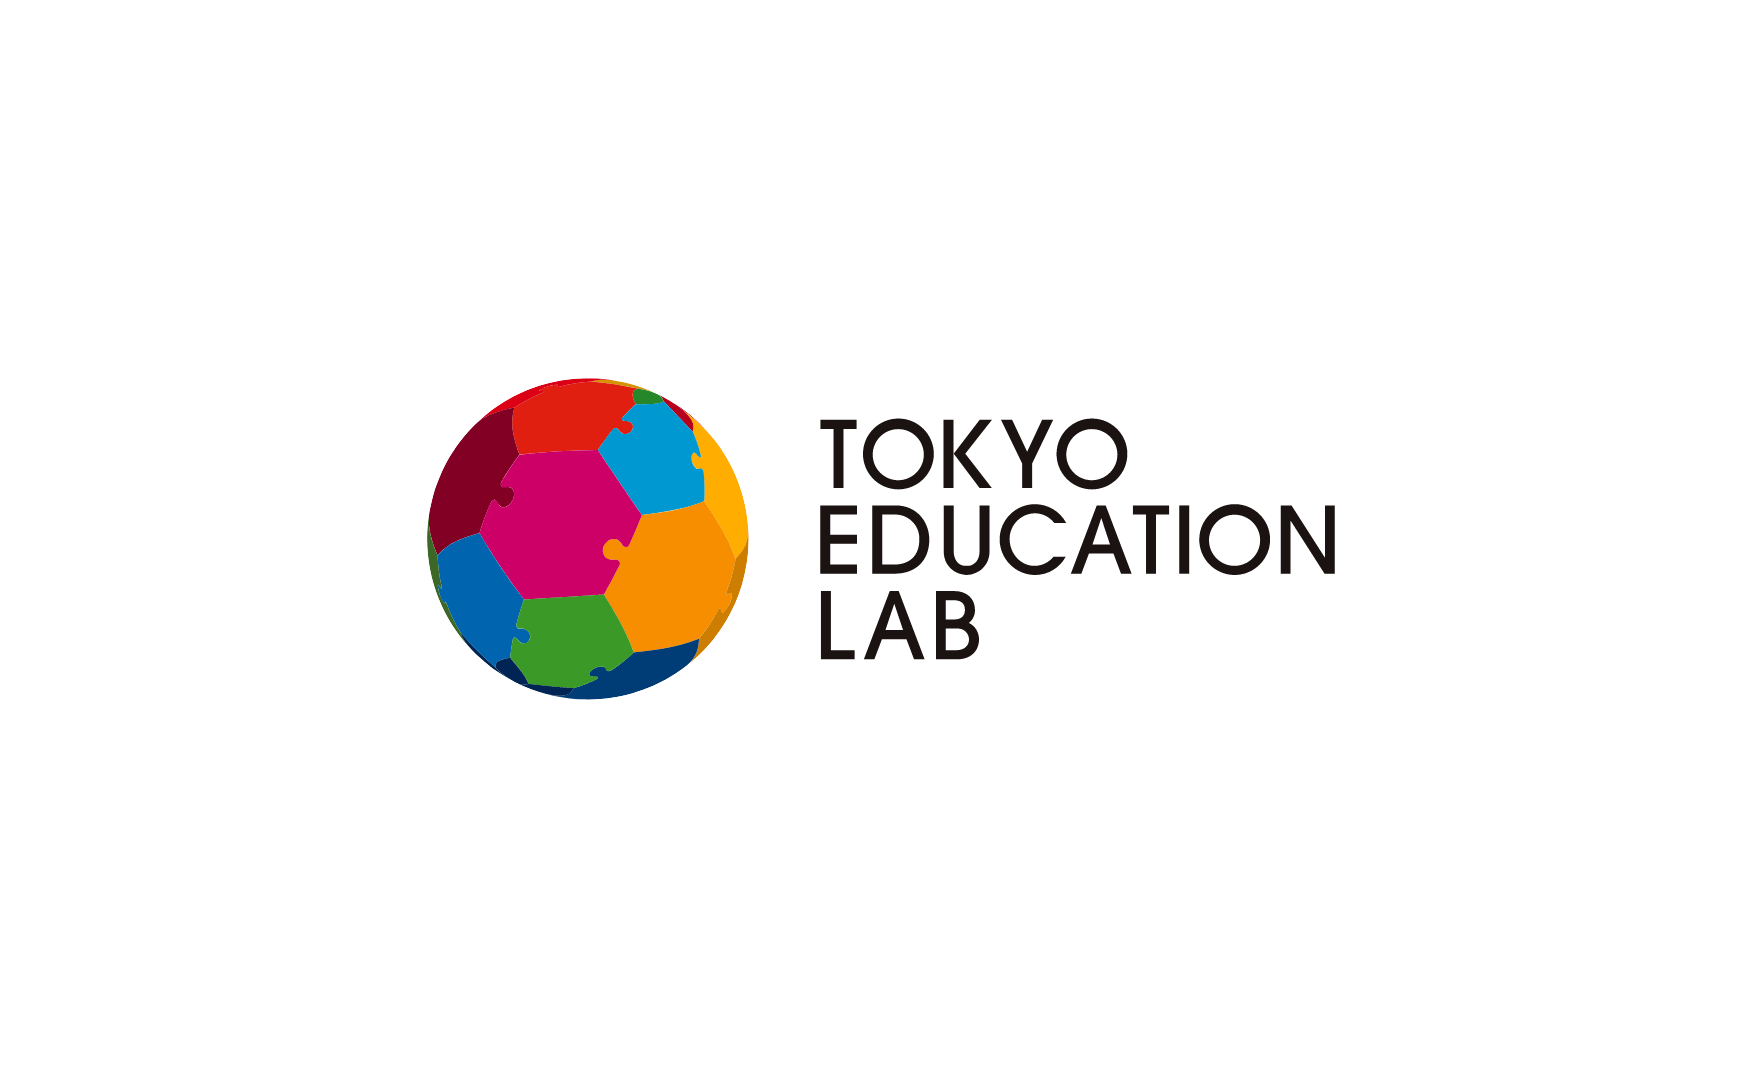 TOKYO EDUCATION LAB